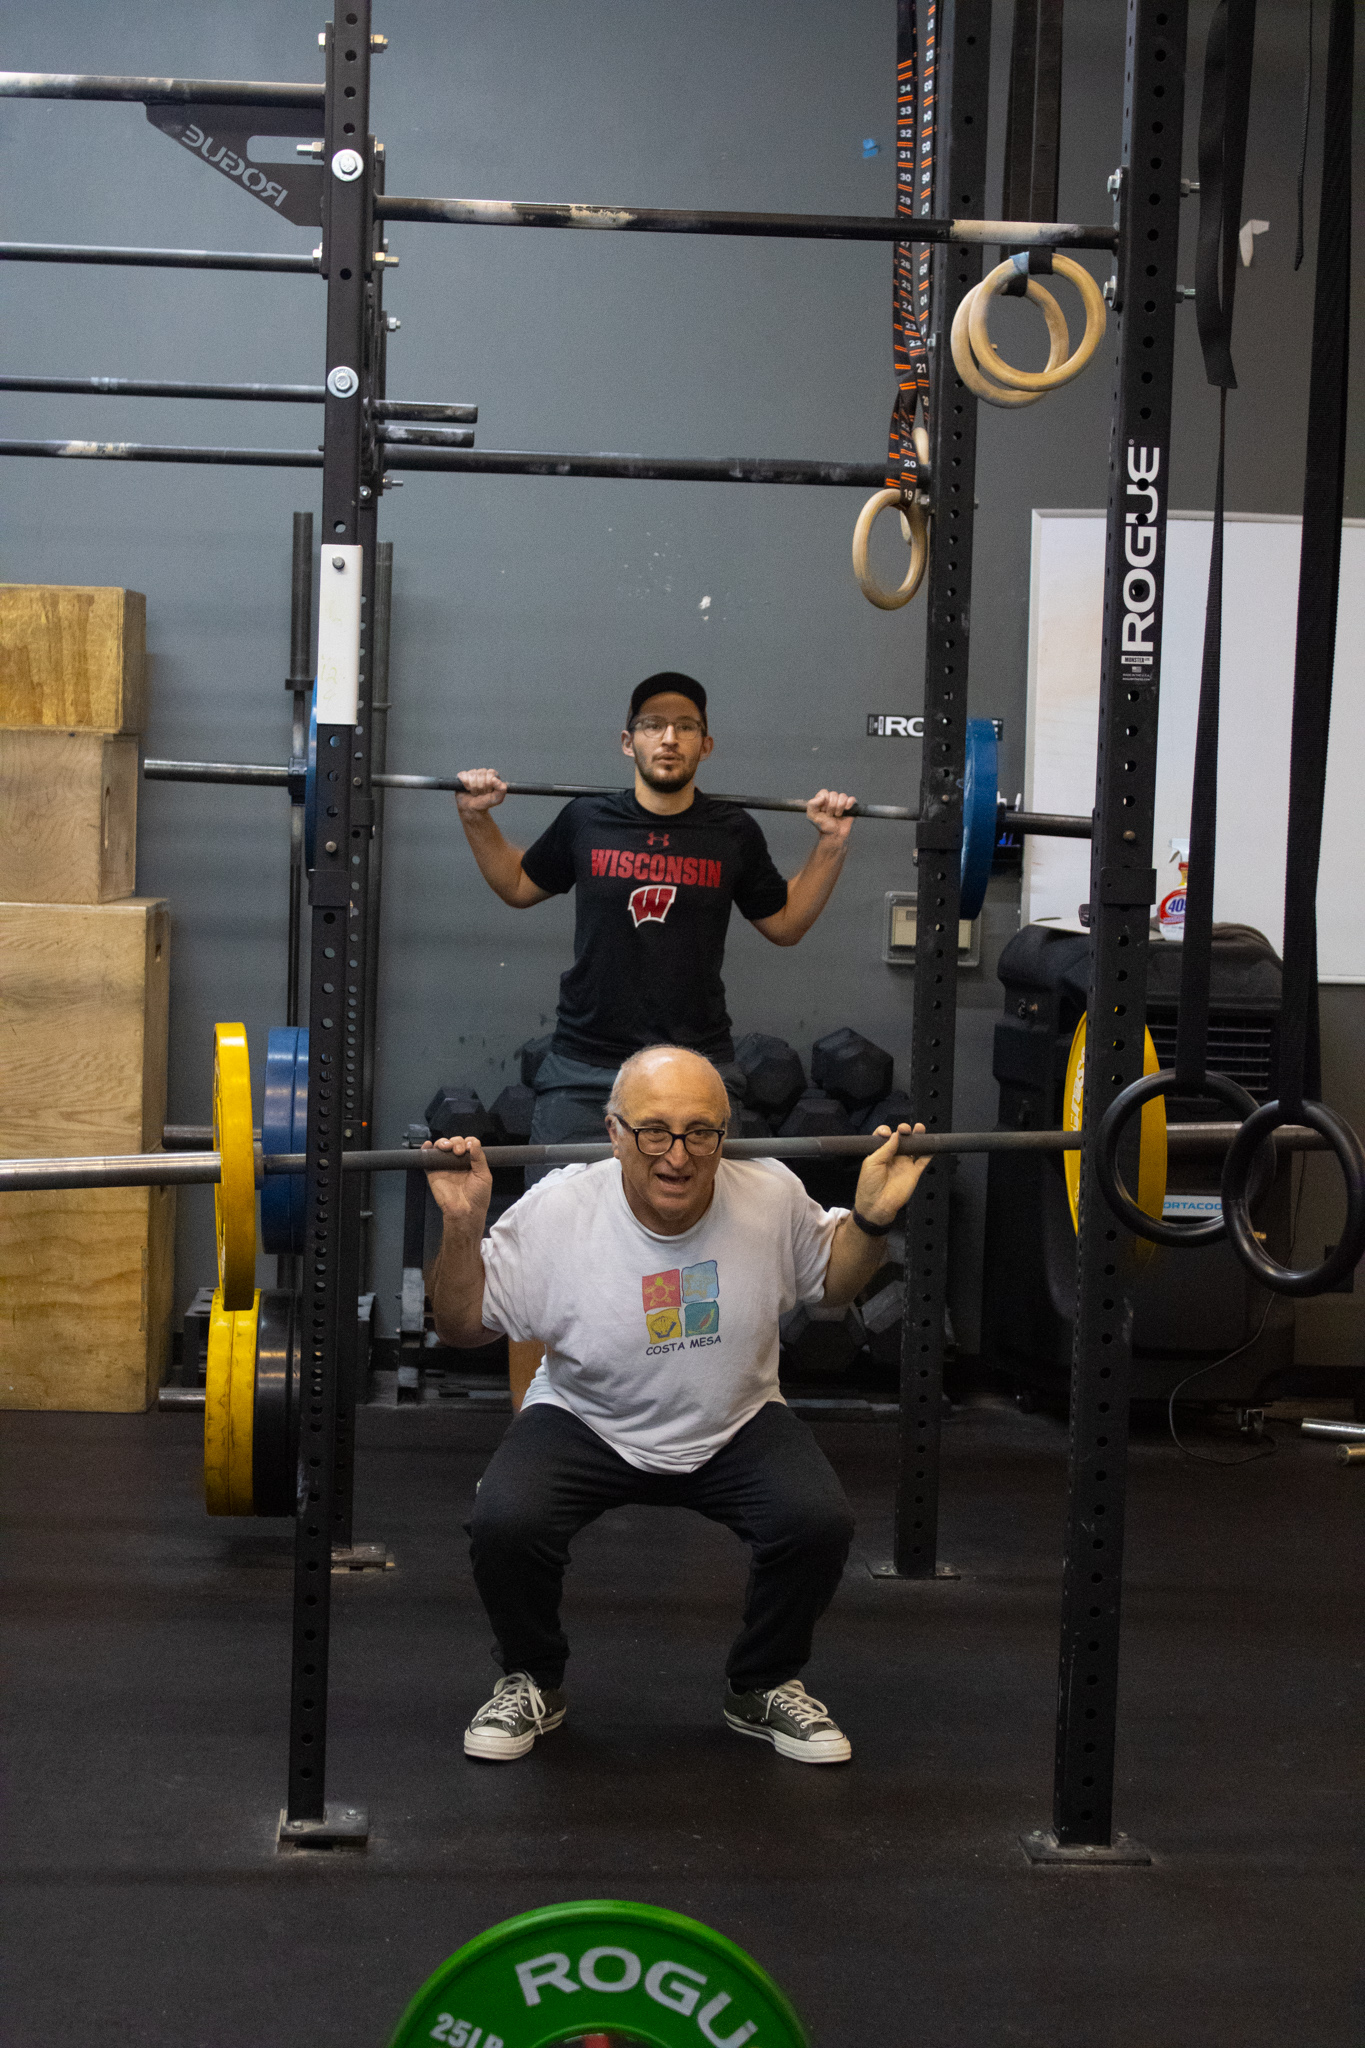 Noah Bloedorn and Roman Lazowski squatting with squat racks at different heights.